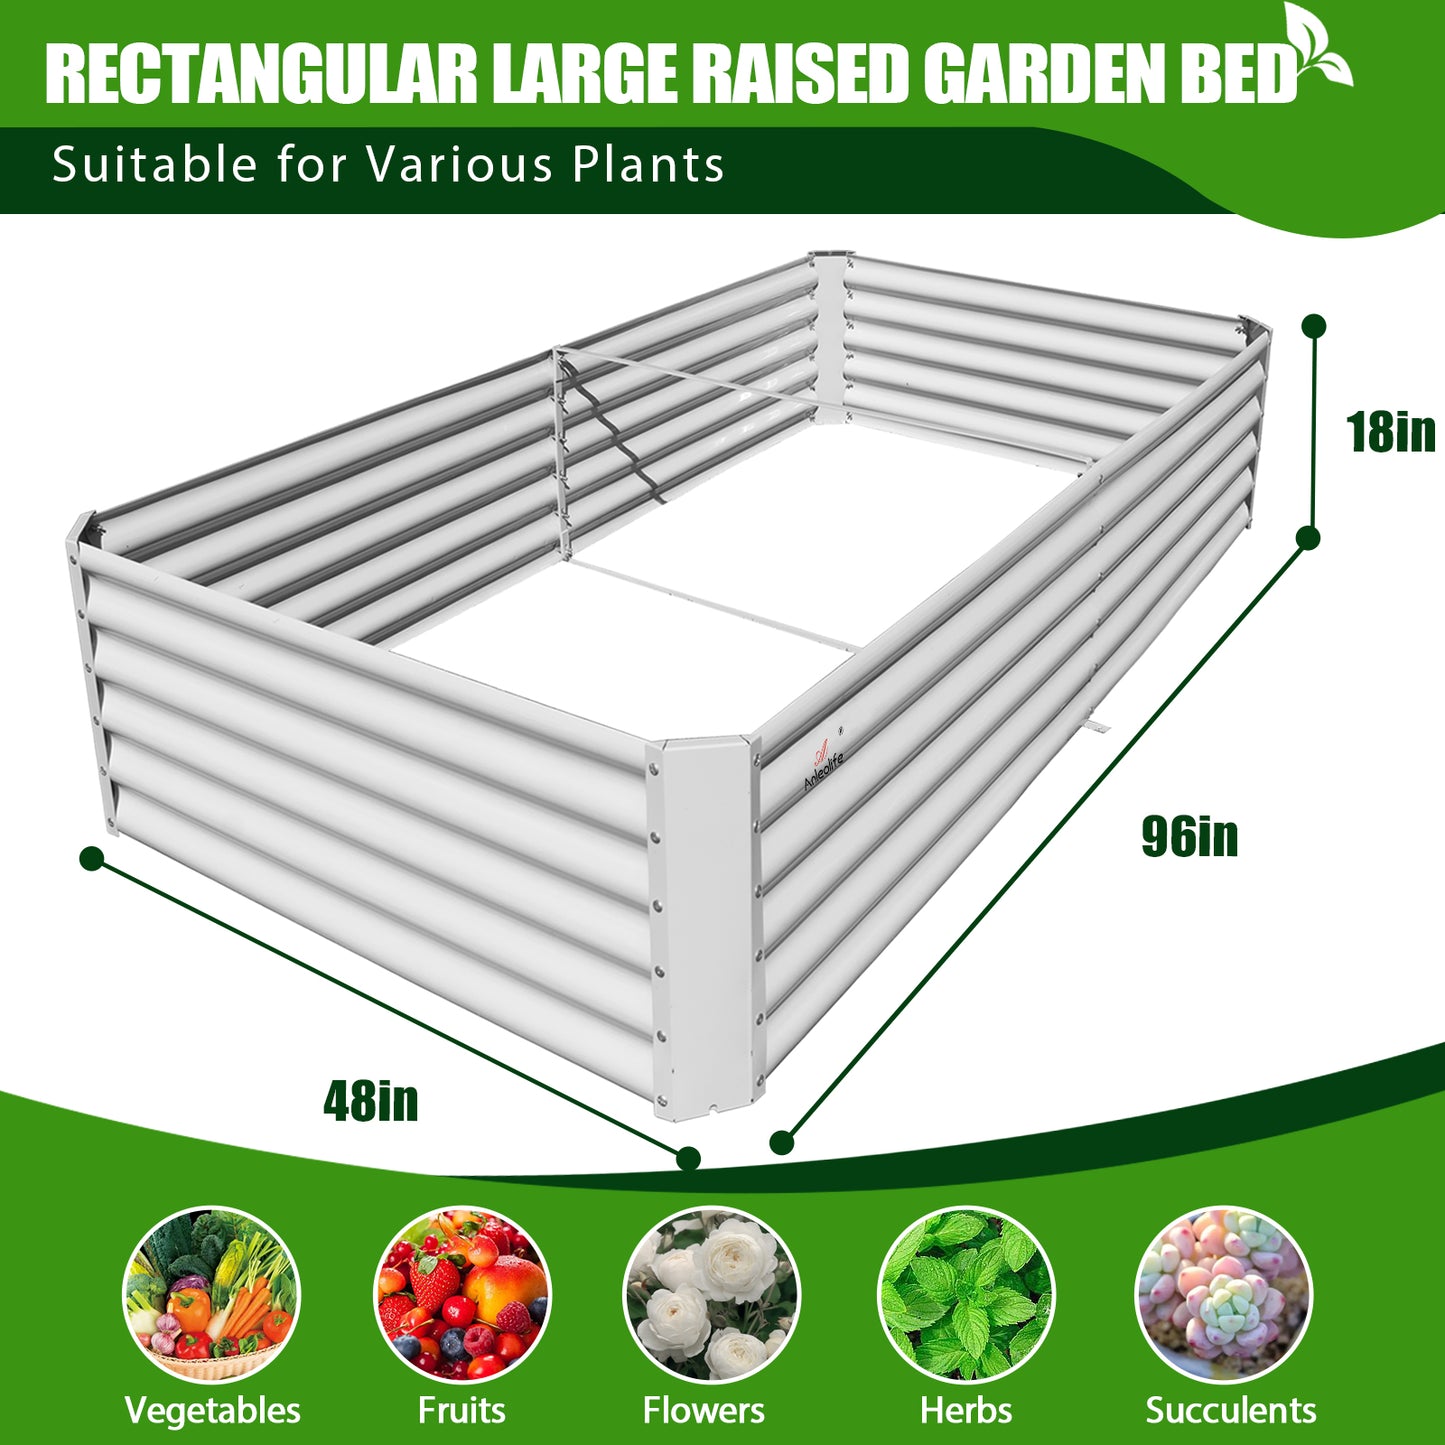 Set of 4: Oval & Rectangular Metal Raised Garden Beds (White)